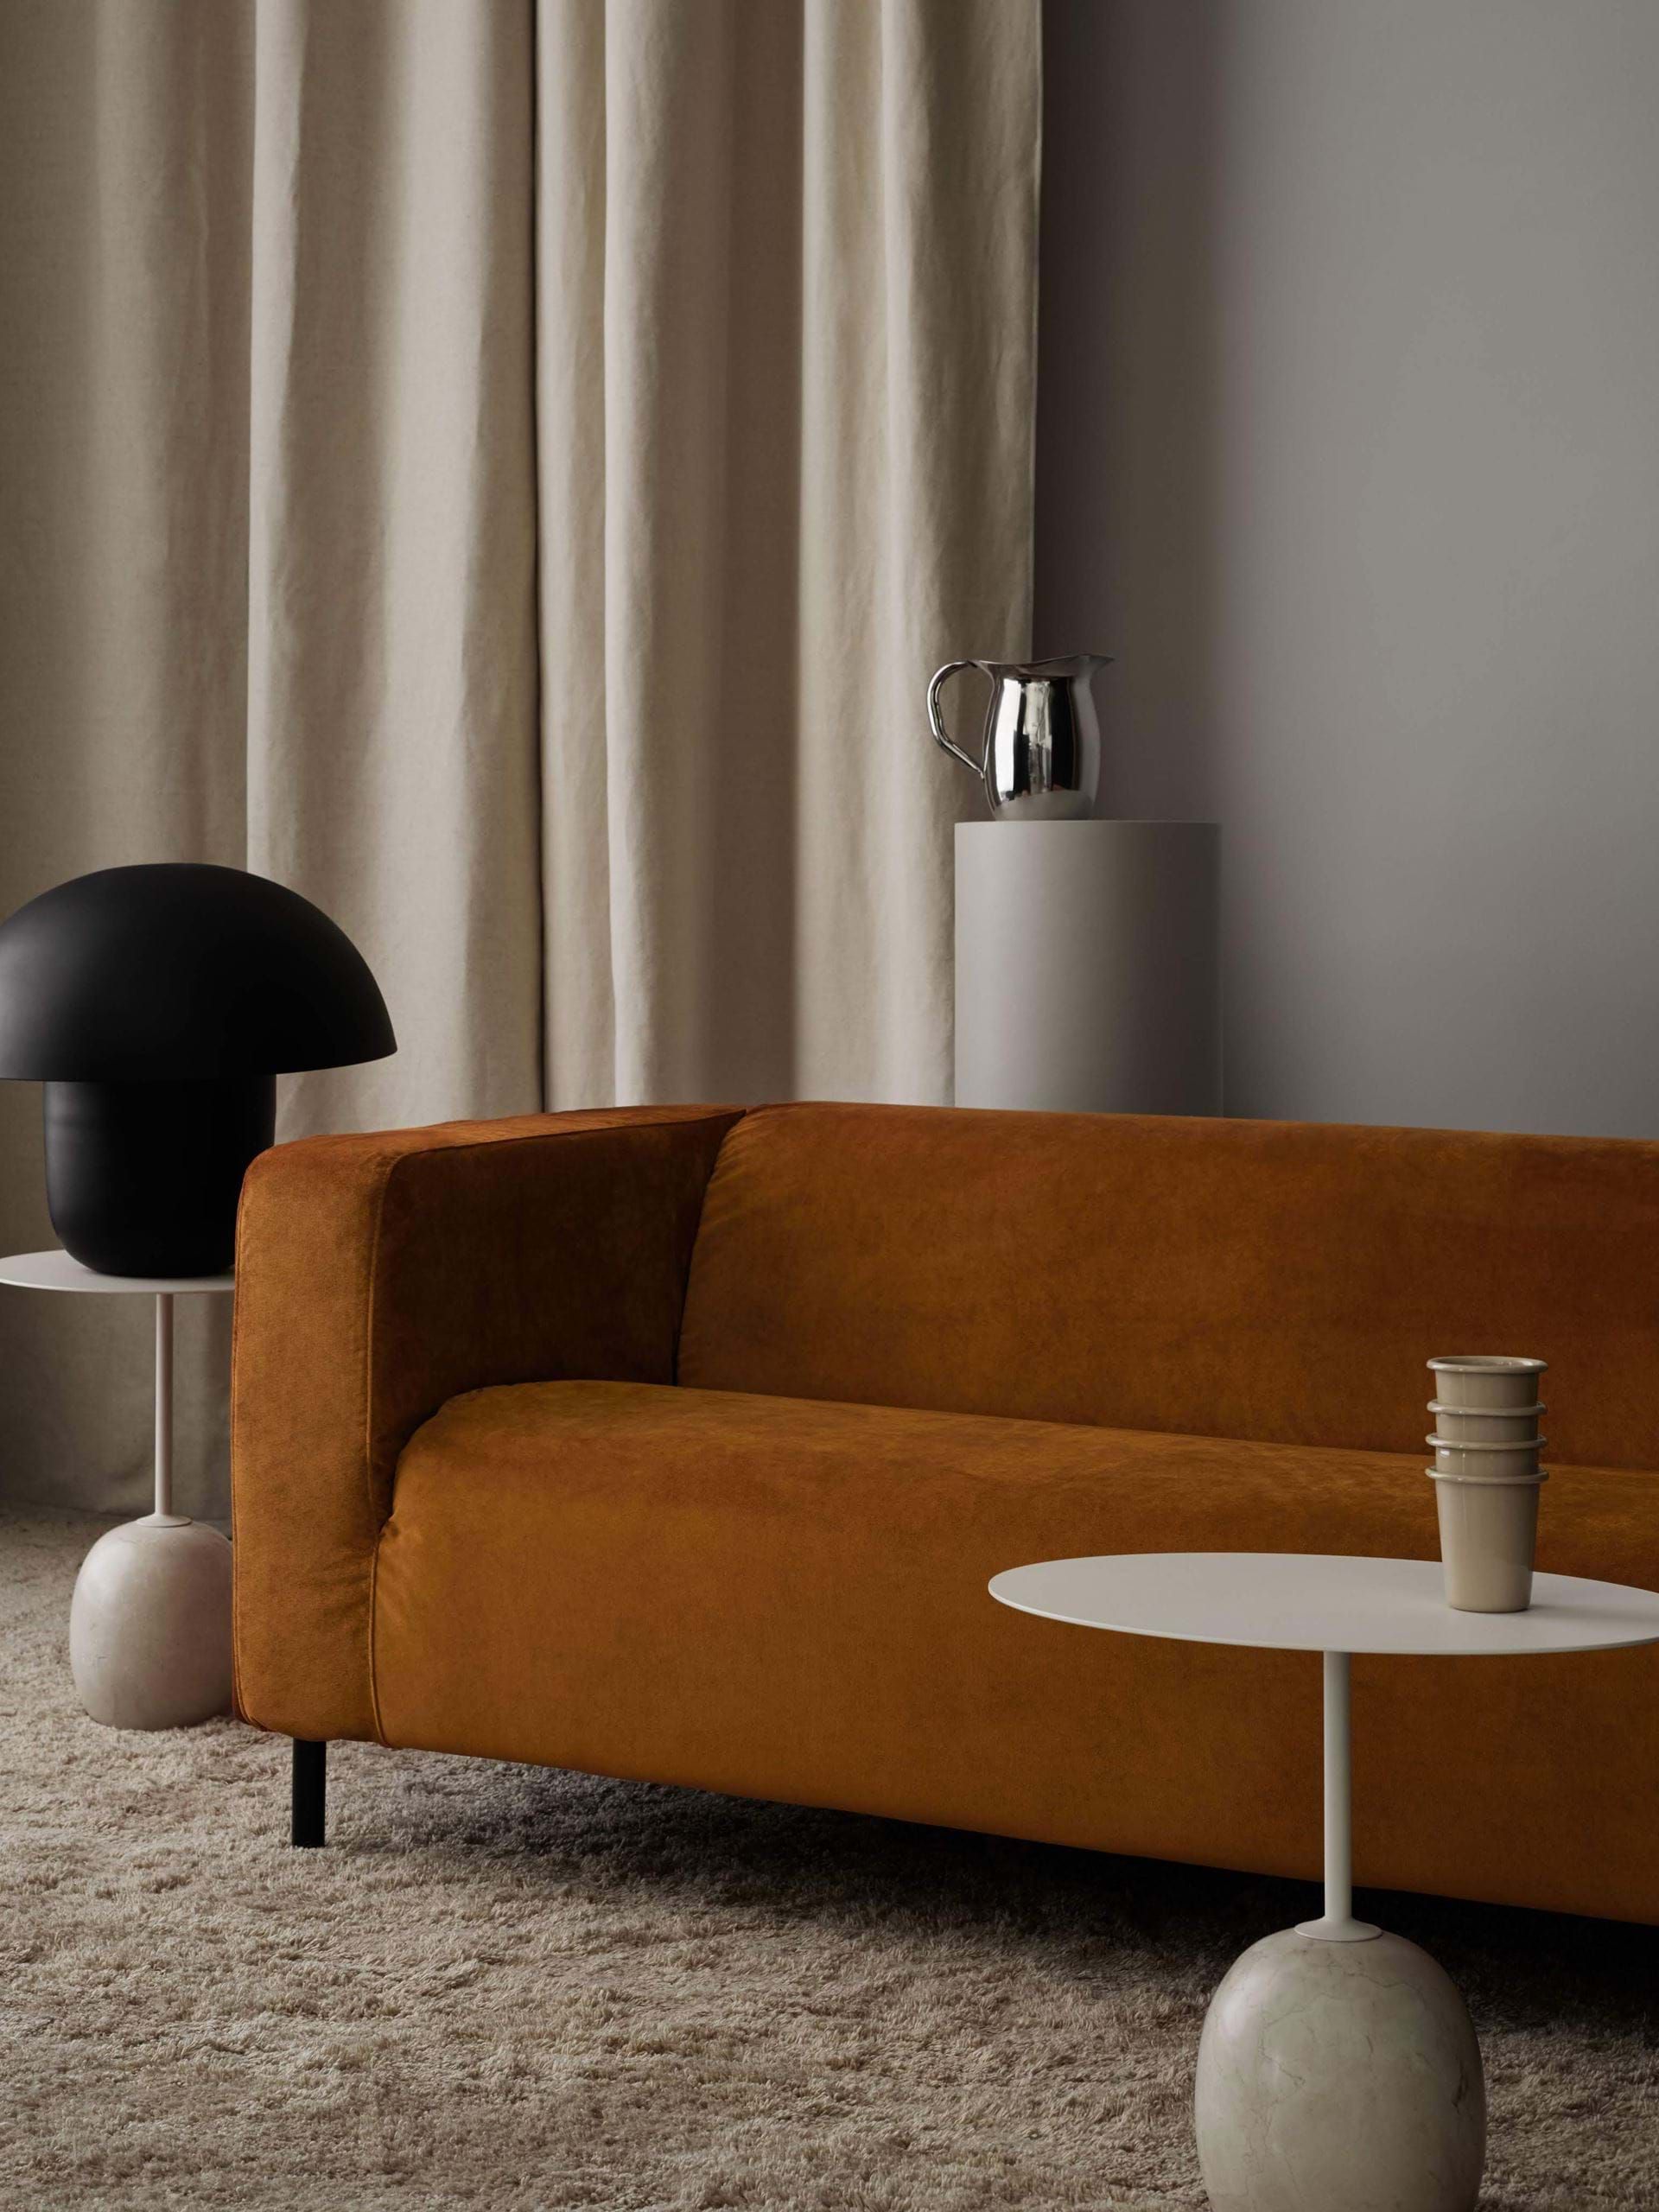 IKEA Klippan sofa review by Bemz | Bemz